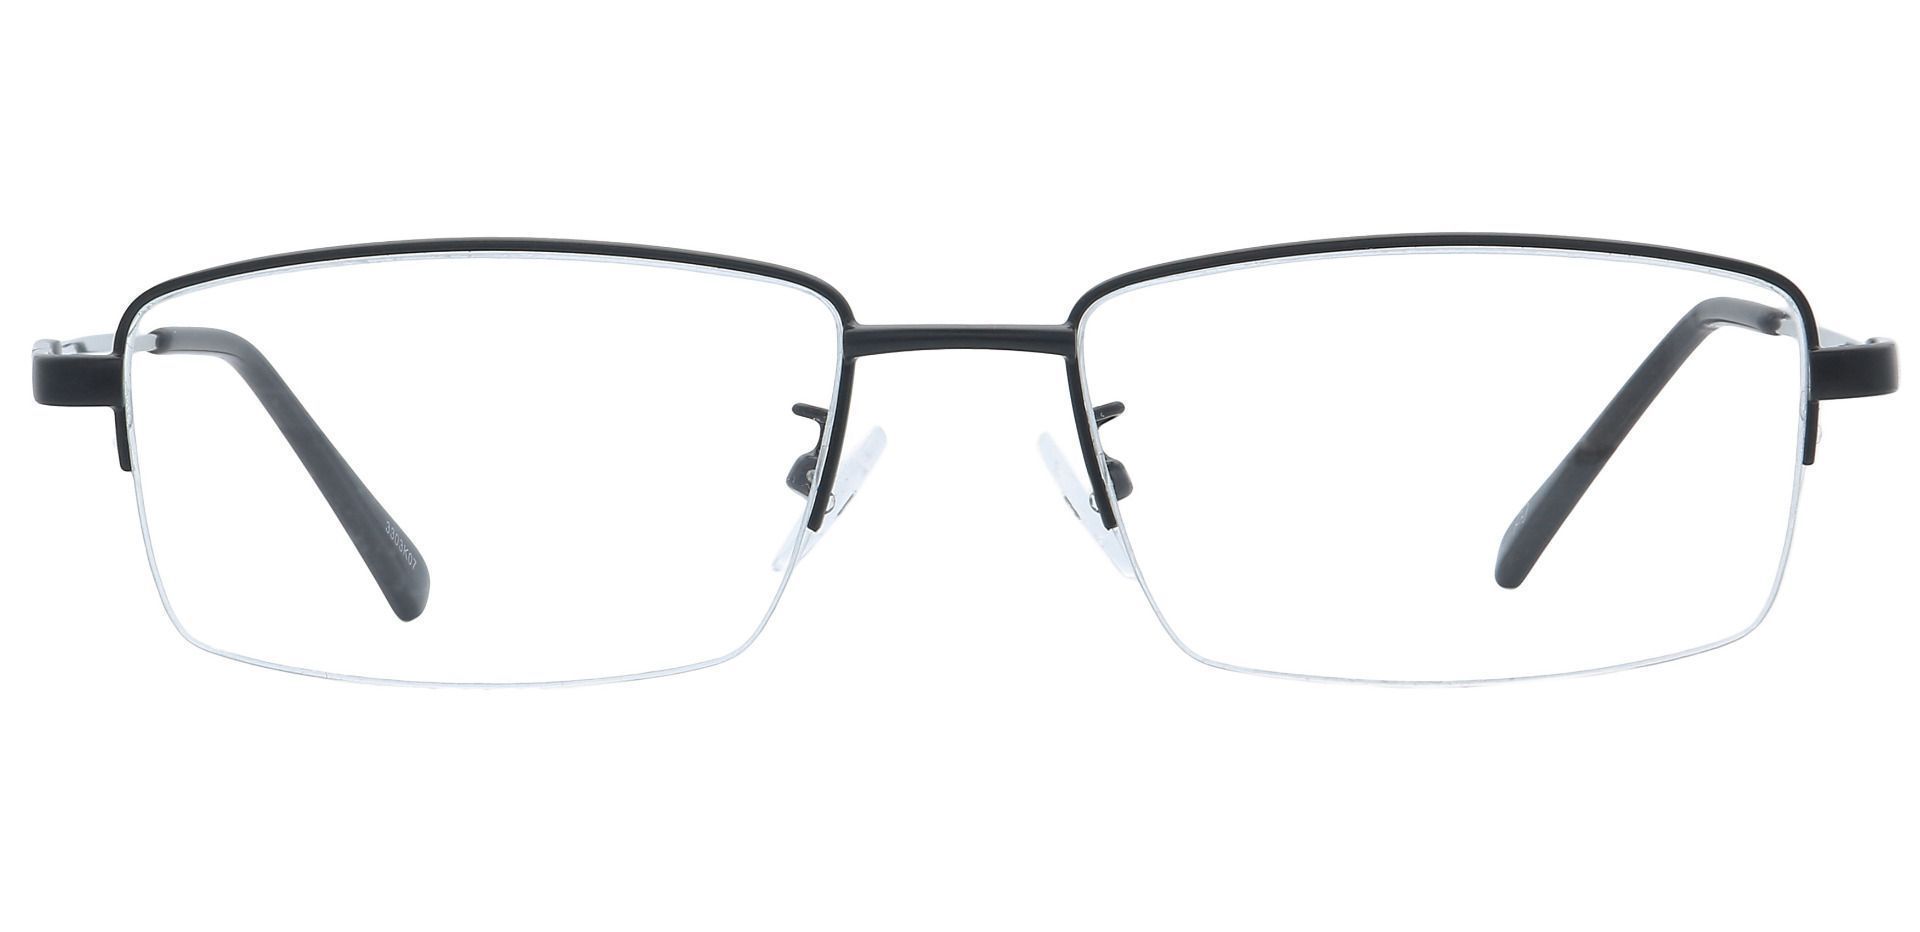 Zander Rectangle Progressive Glasses - Black